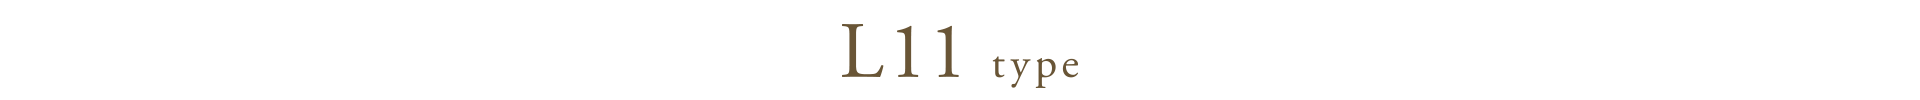 L11 type